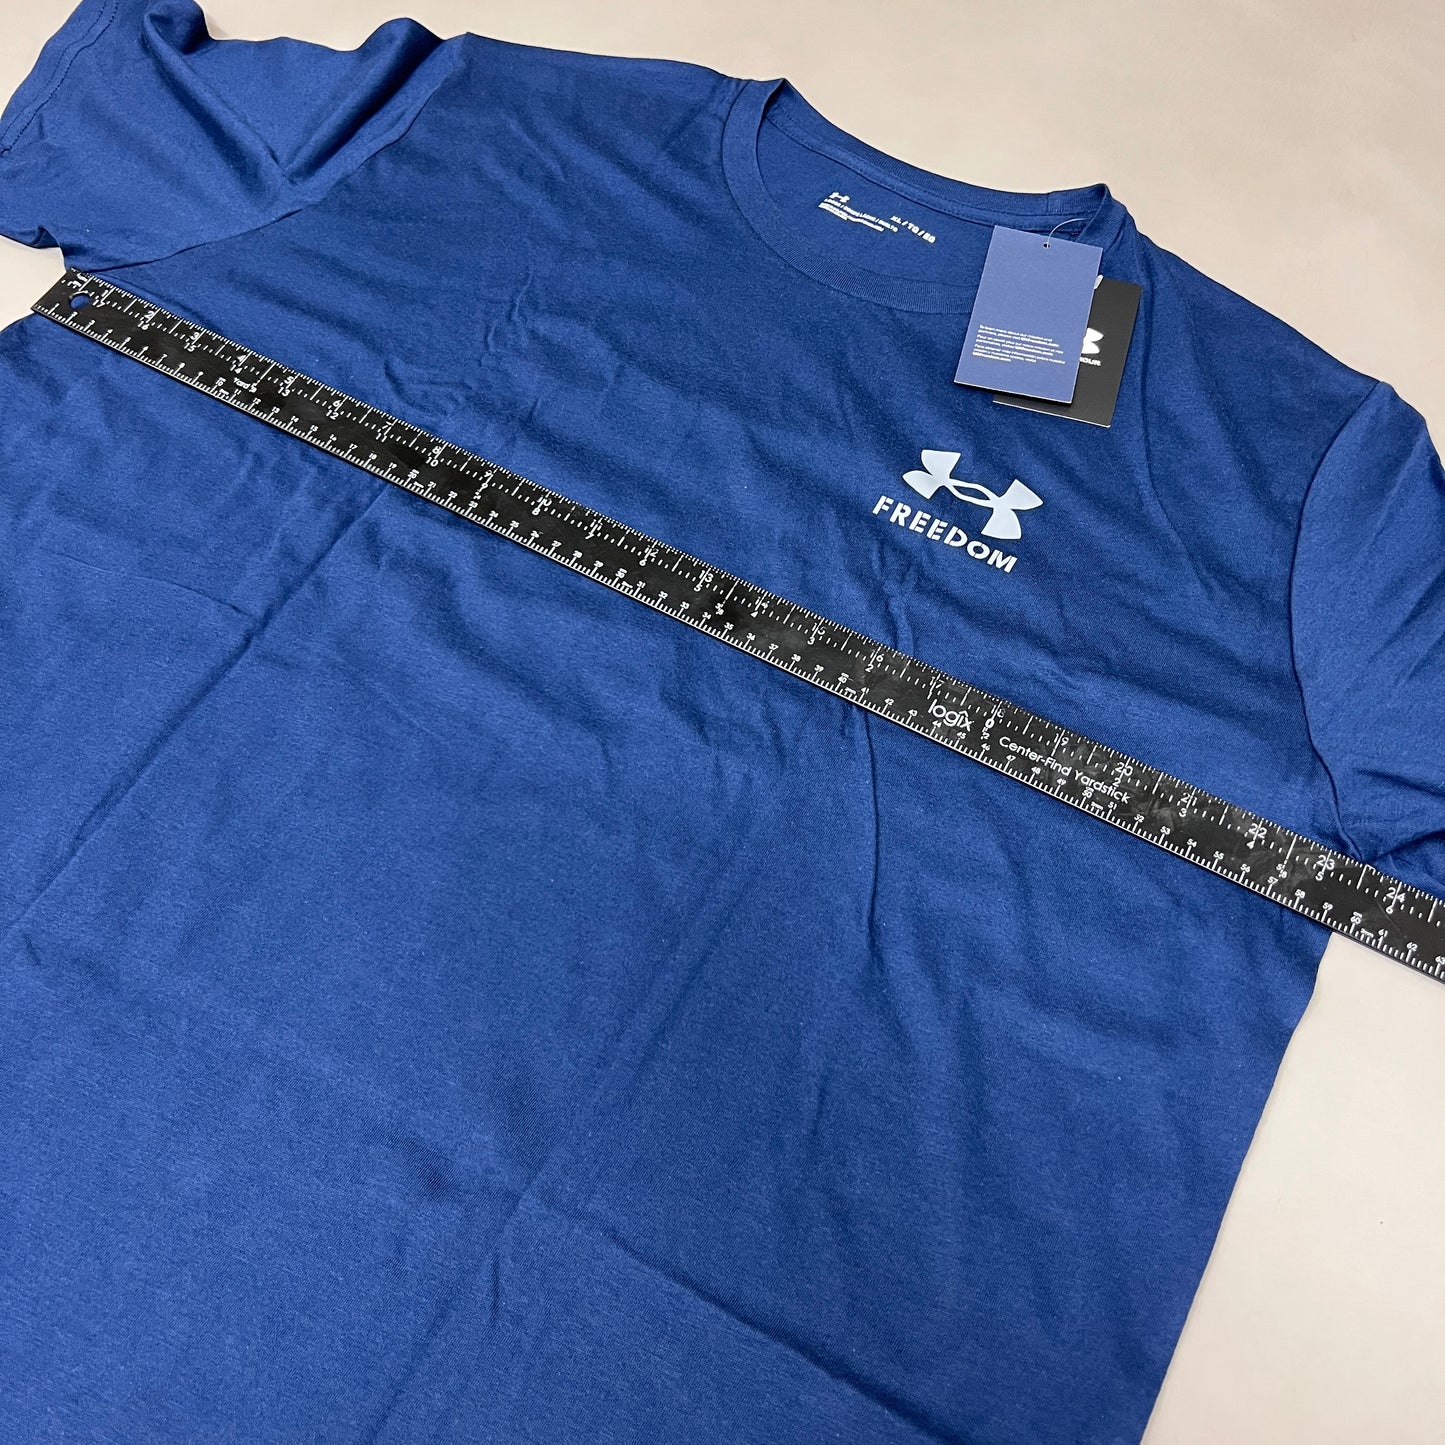 UNDER ARMOUR Freedom Flag T-Shirt Men's Navy Academy / Steel-408 Sz XL 1370810 (New)